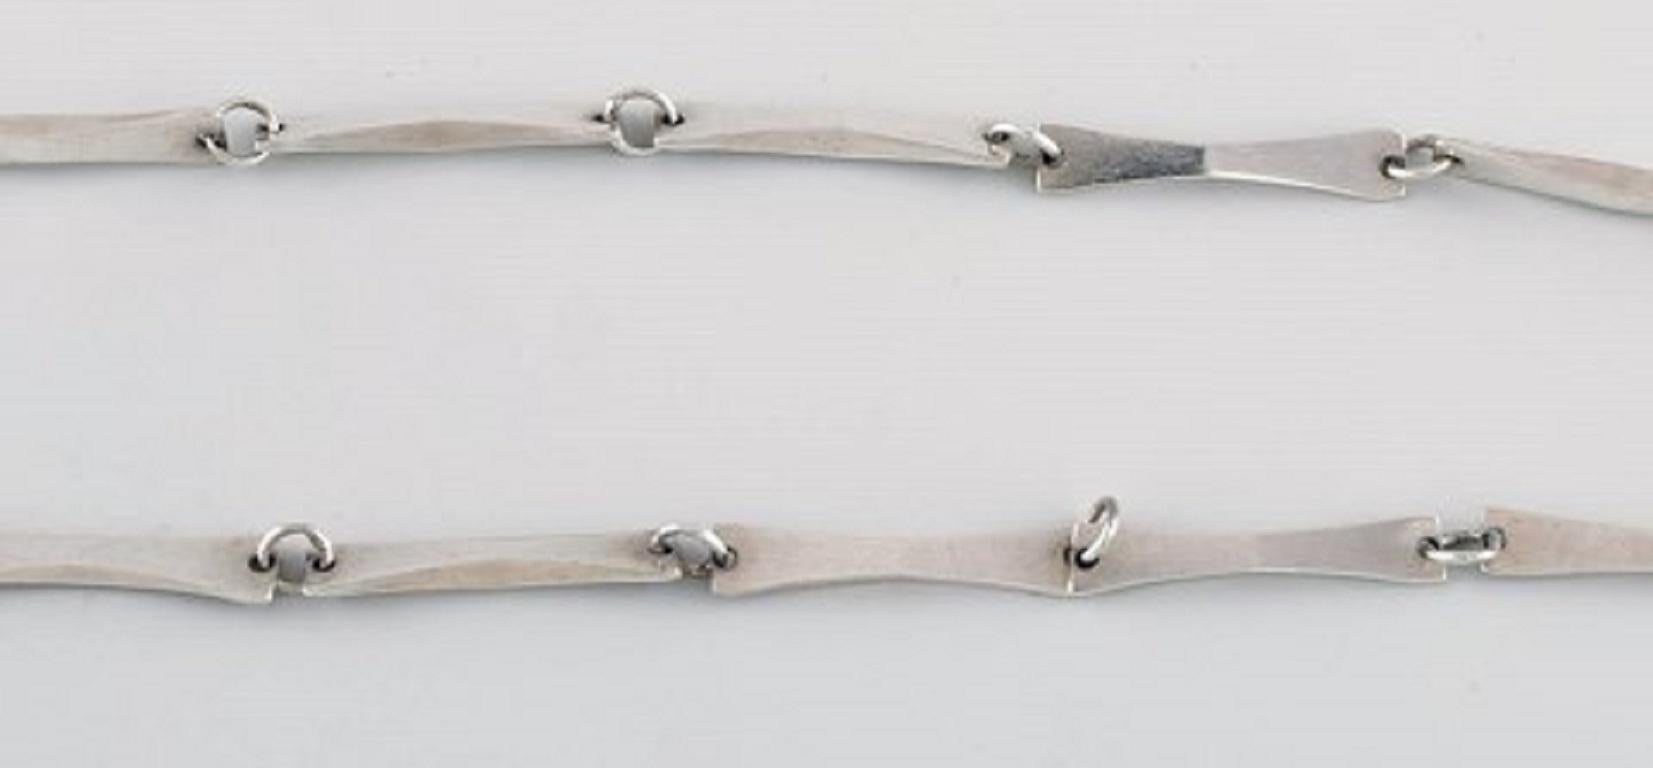 anton link chain